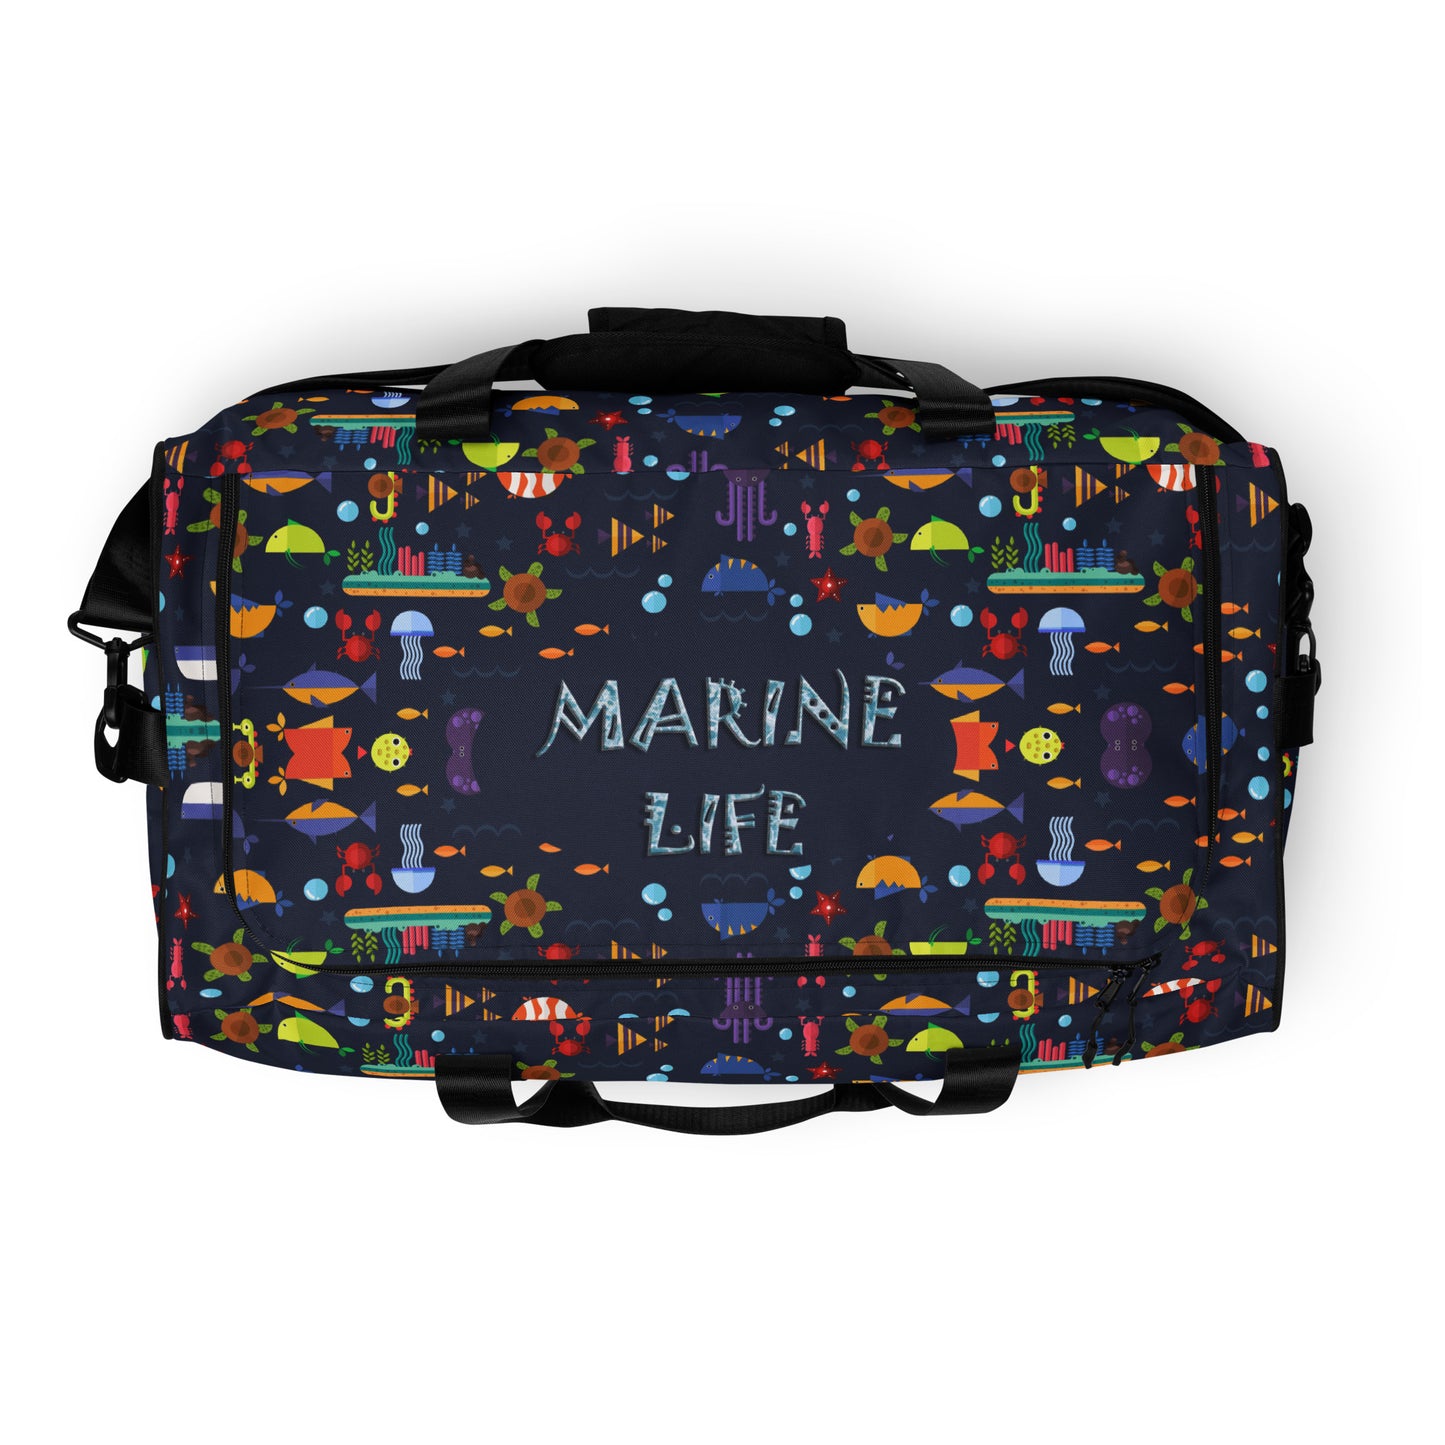 Marine Life Duffle bag